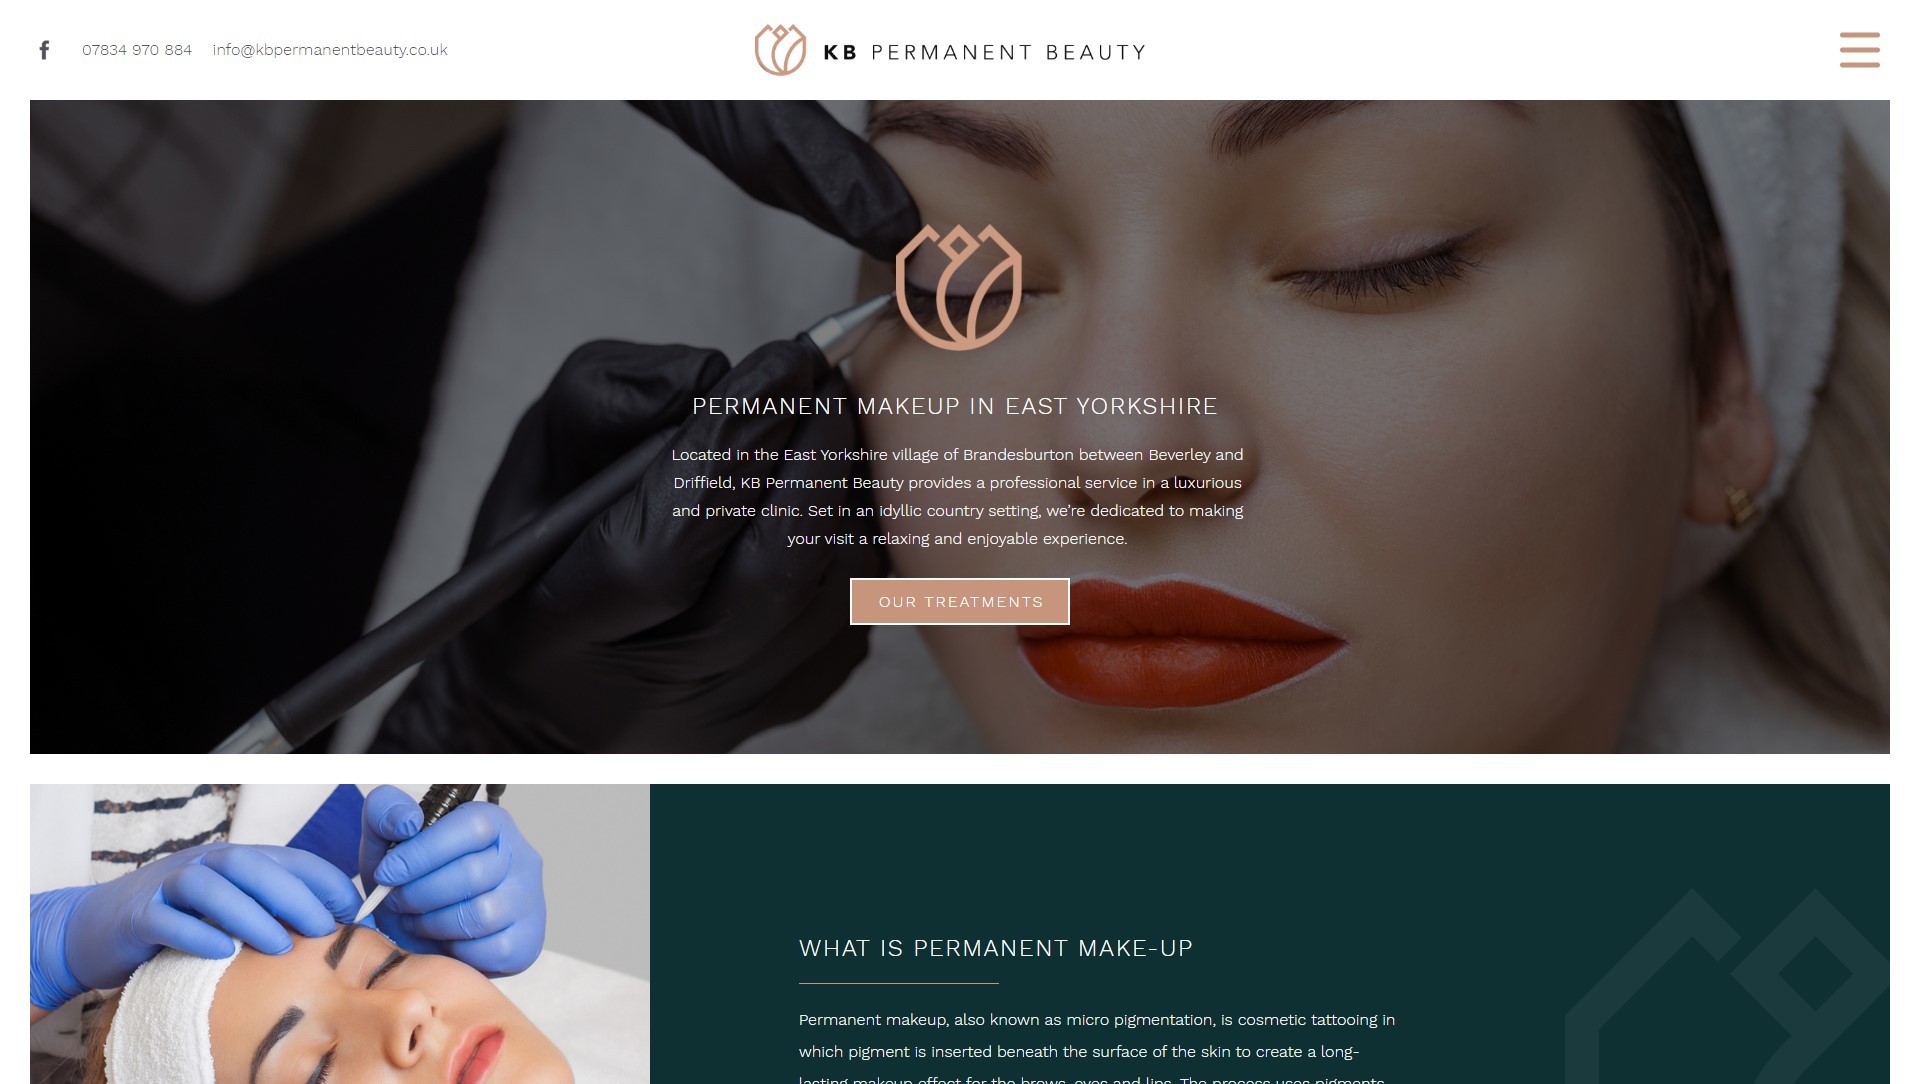 KB Permanent Beauty website design